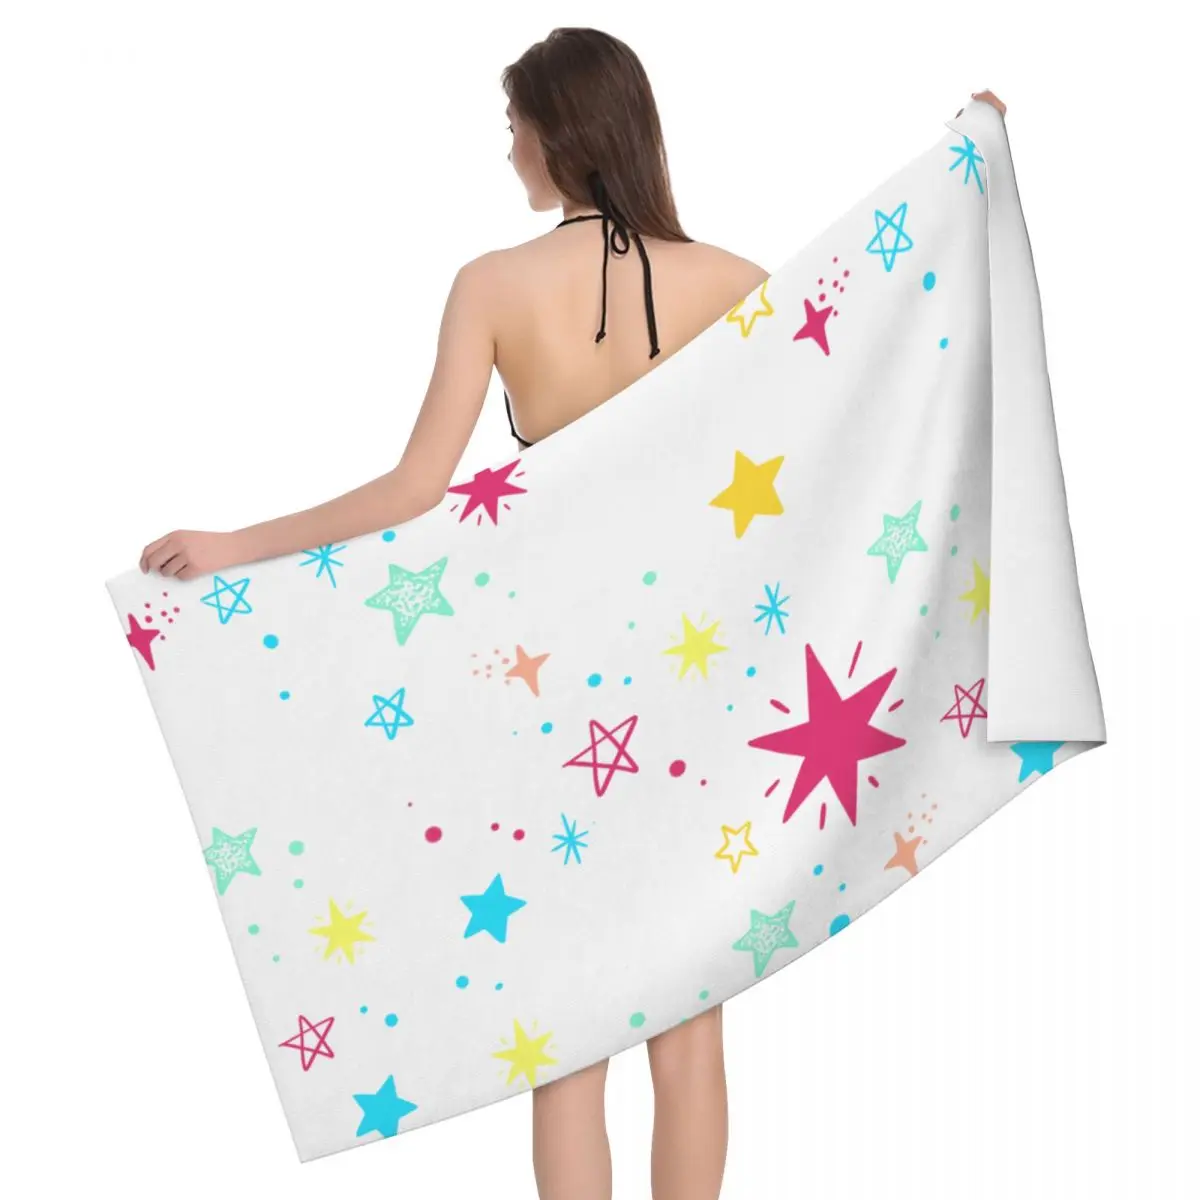 

Colour The Stars Beach Towels Pool Towels Large Sand Free Microfiber Beach Towels, Quick Dry Lightweight Bath Swim Towels